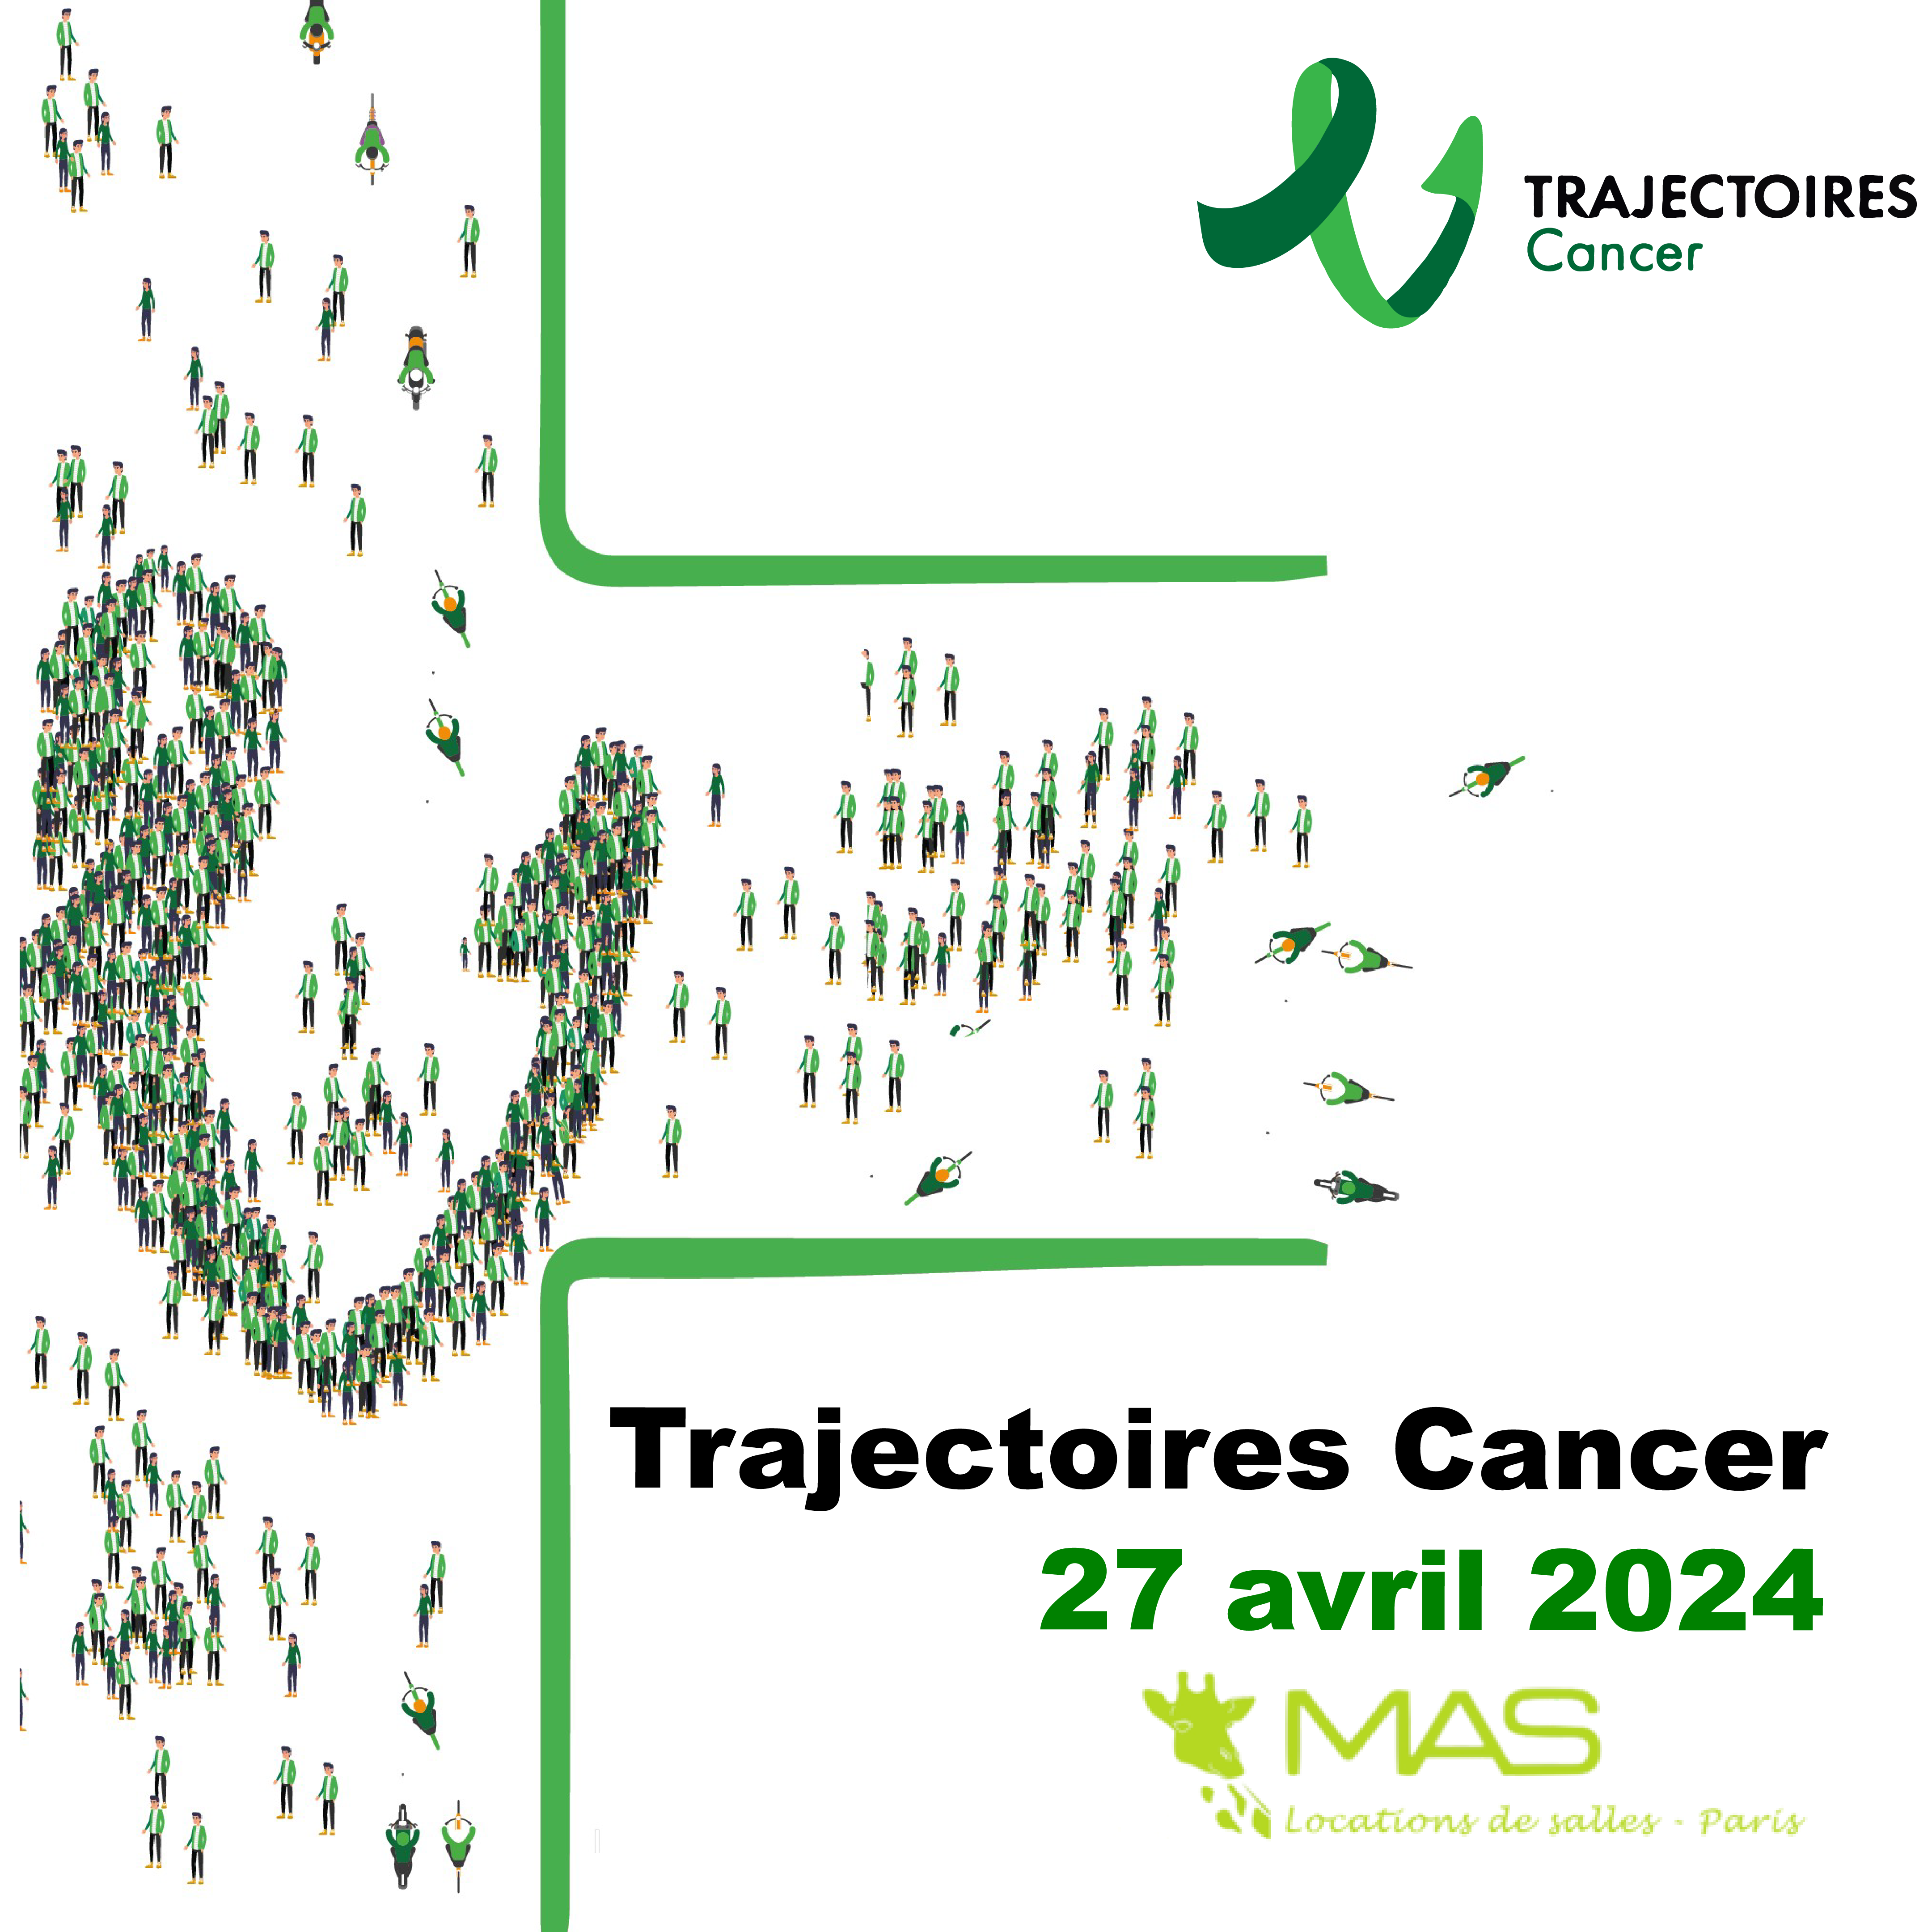 Trajectoires Cancer - Affiche